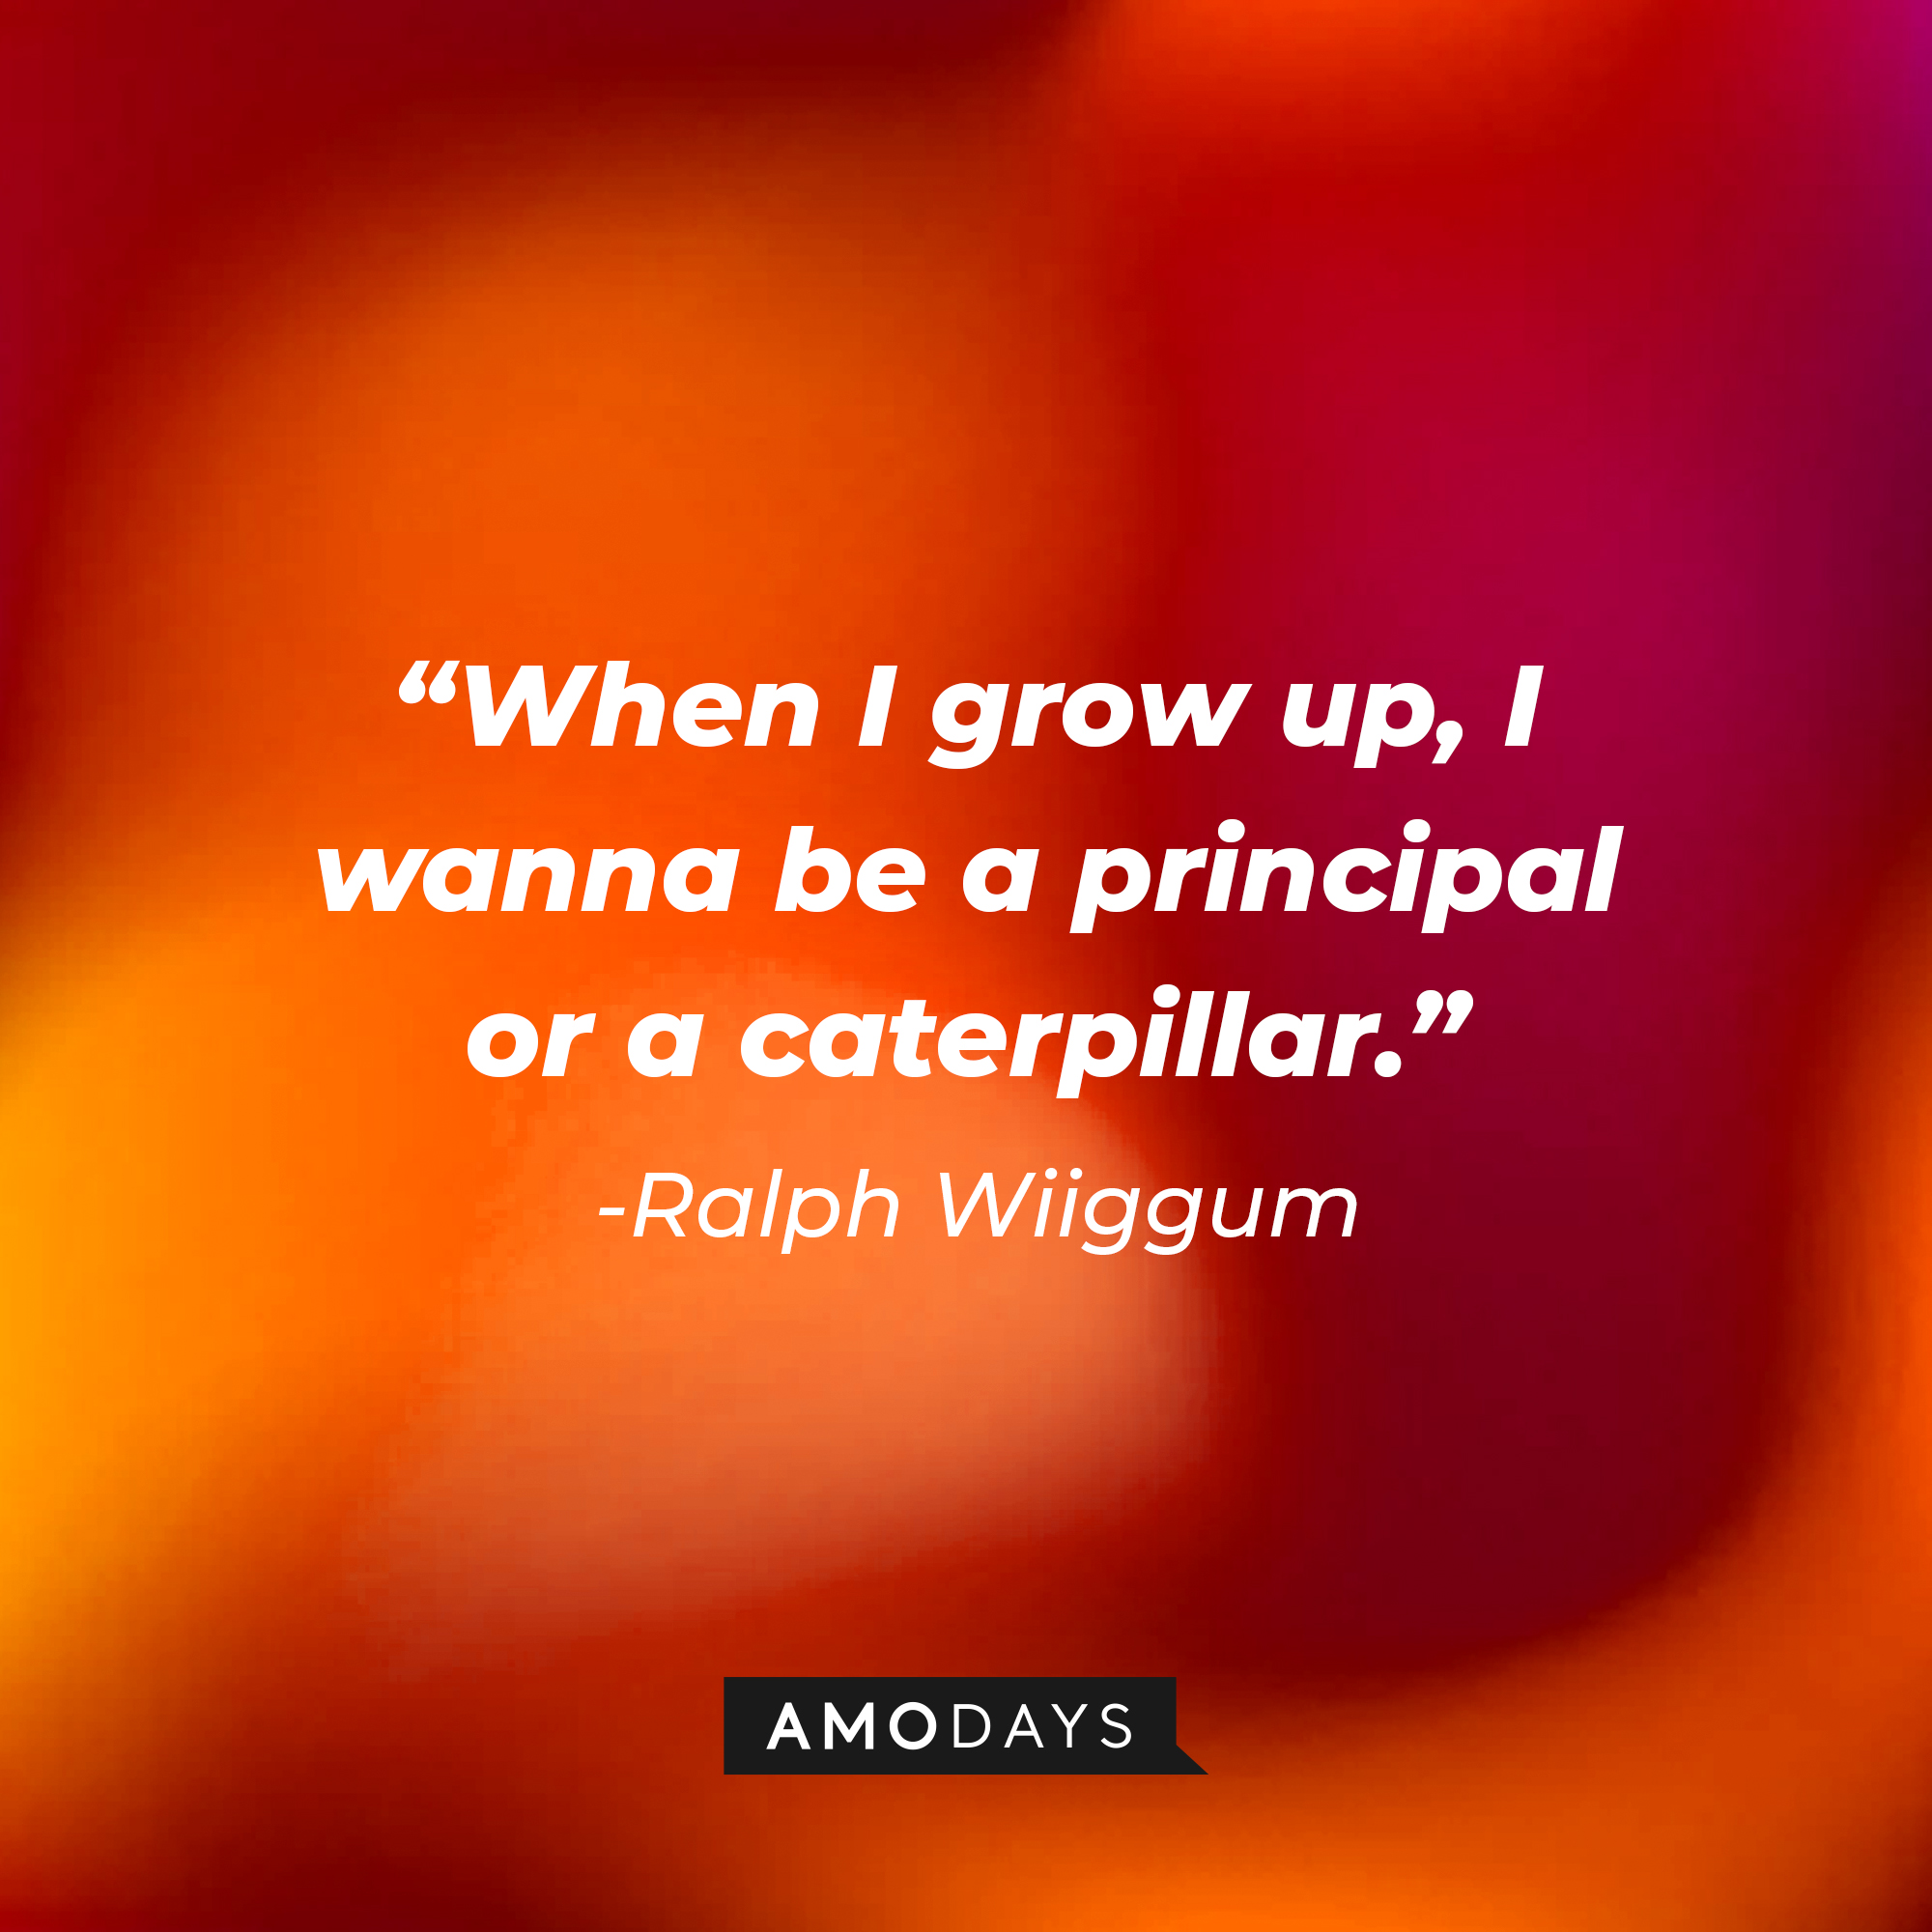 Ralph Wiiggum’s quote: “When I grow up, I wanna be a principal or a caterpillar.” | Source: AmoDays